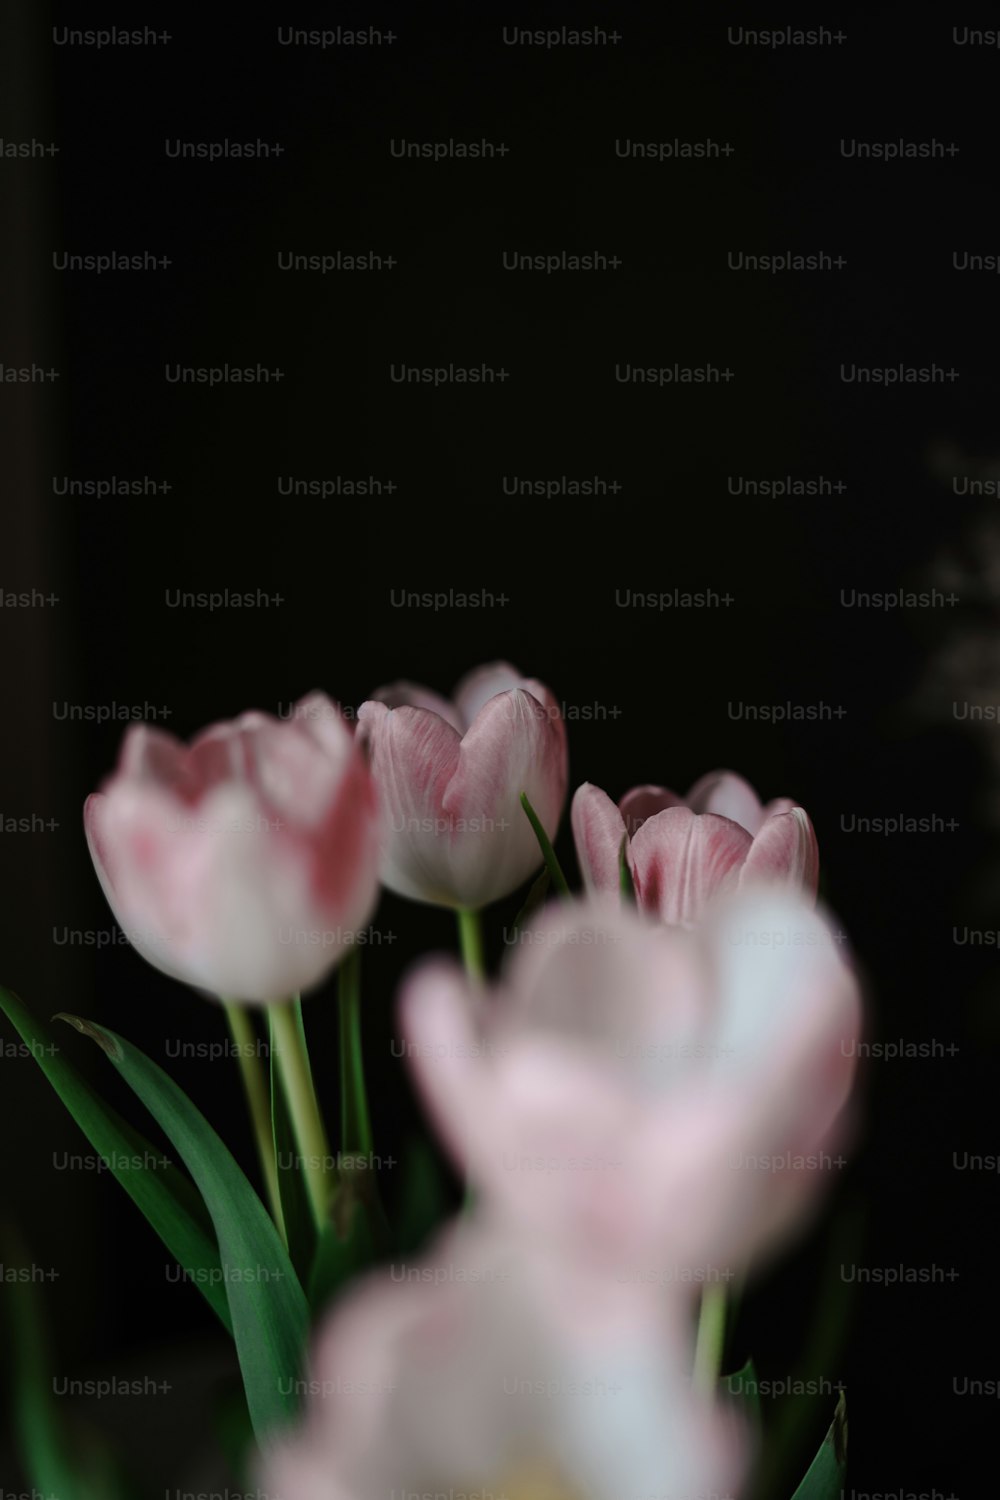 1000+ Lockscreen Wallpaper Pictures | Download Free Images on Unsplash